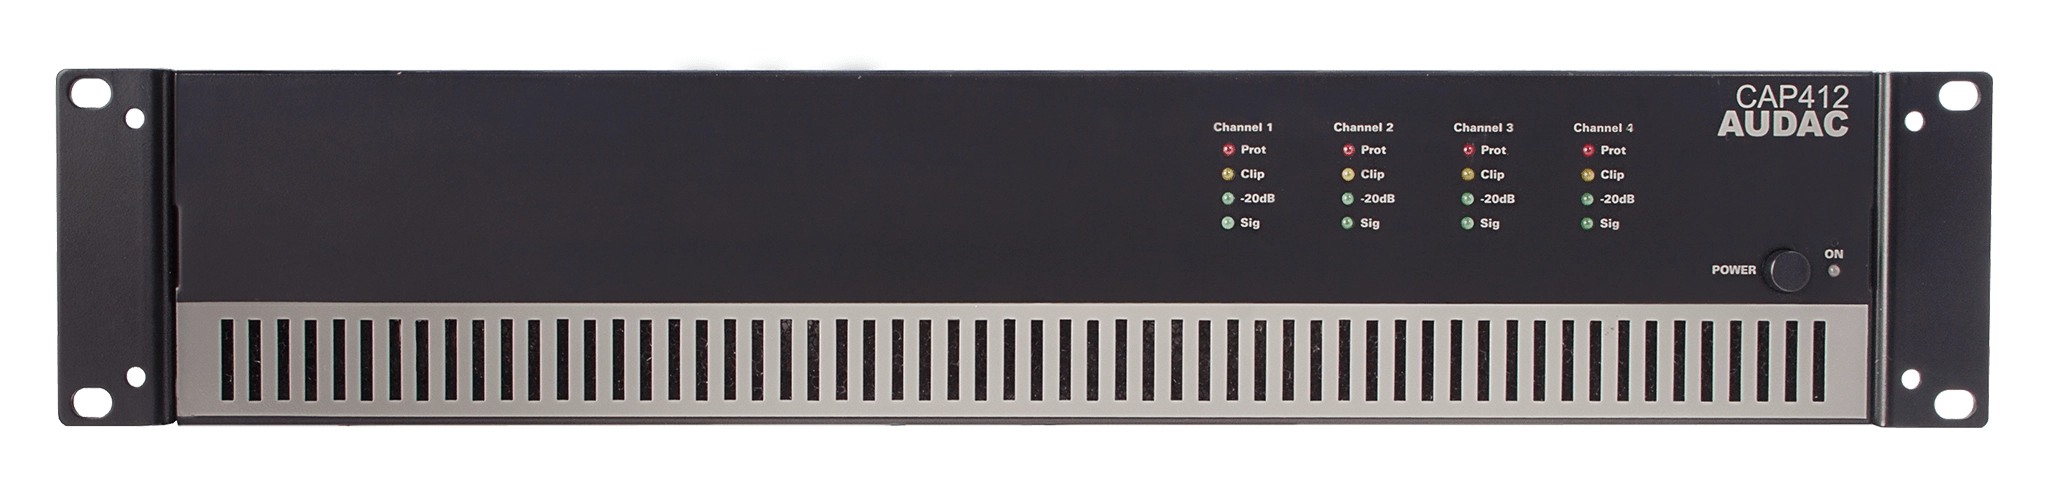 AUDAC CAP412 - 4 x 120W Quad Class-D Power Amplifier, 100V or 4Ω